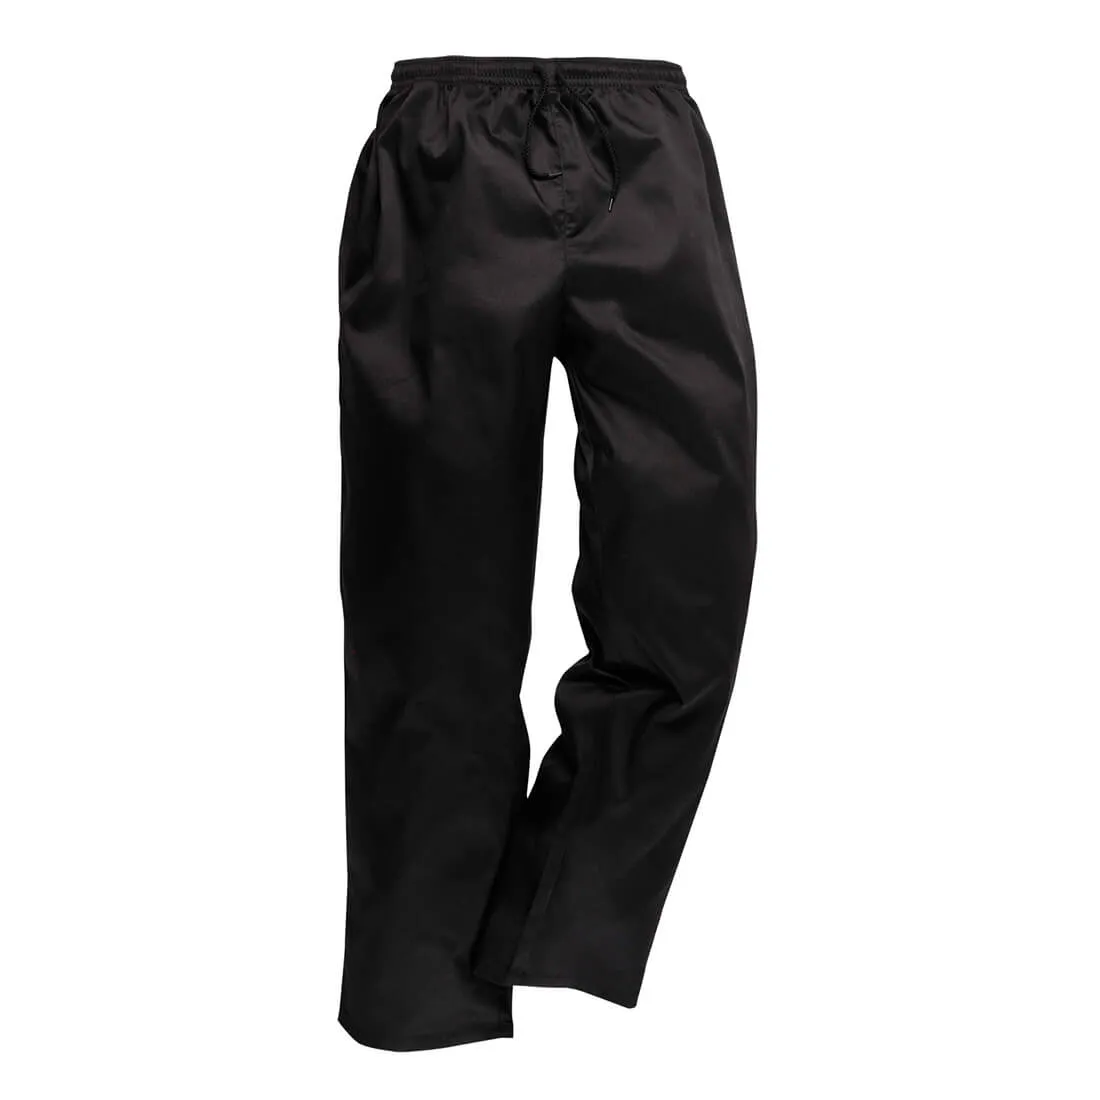 Portwest C070 Drawstring Chef Trousers - Black, Medium, 31"